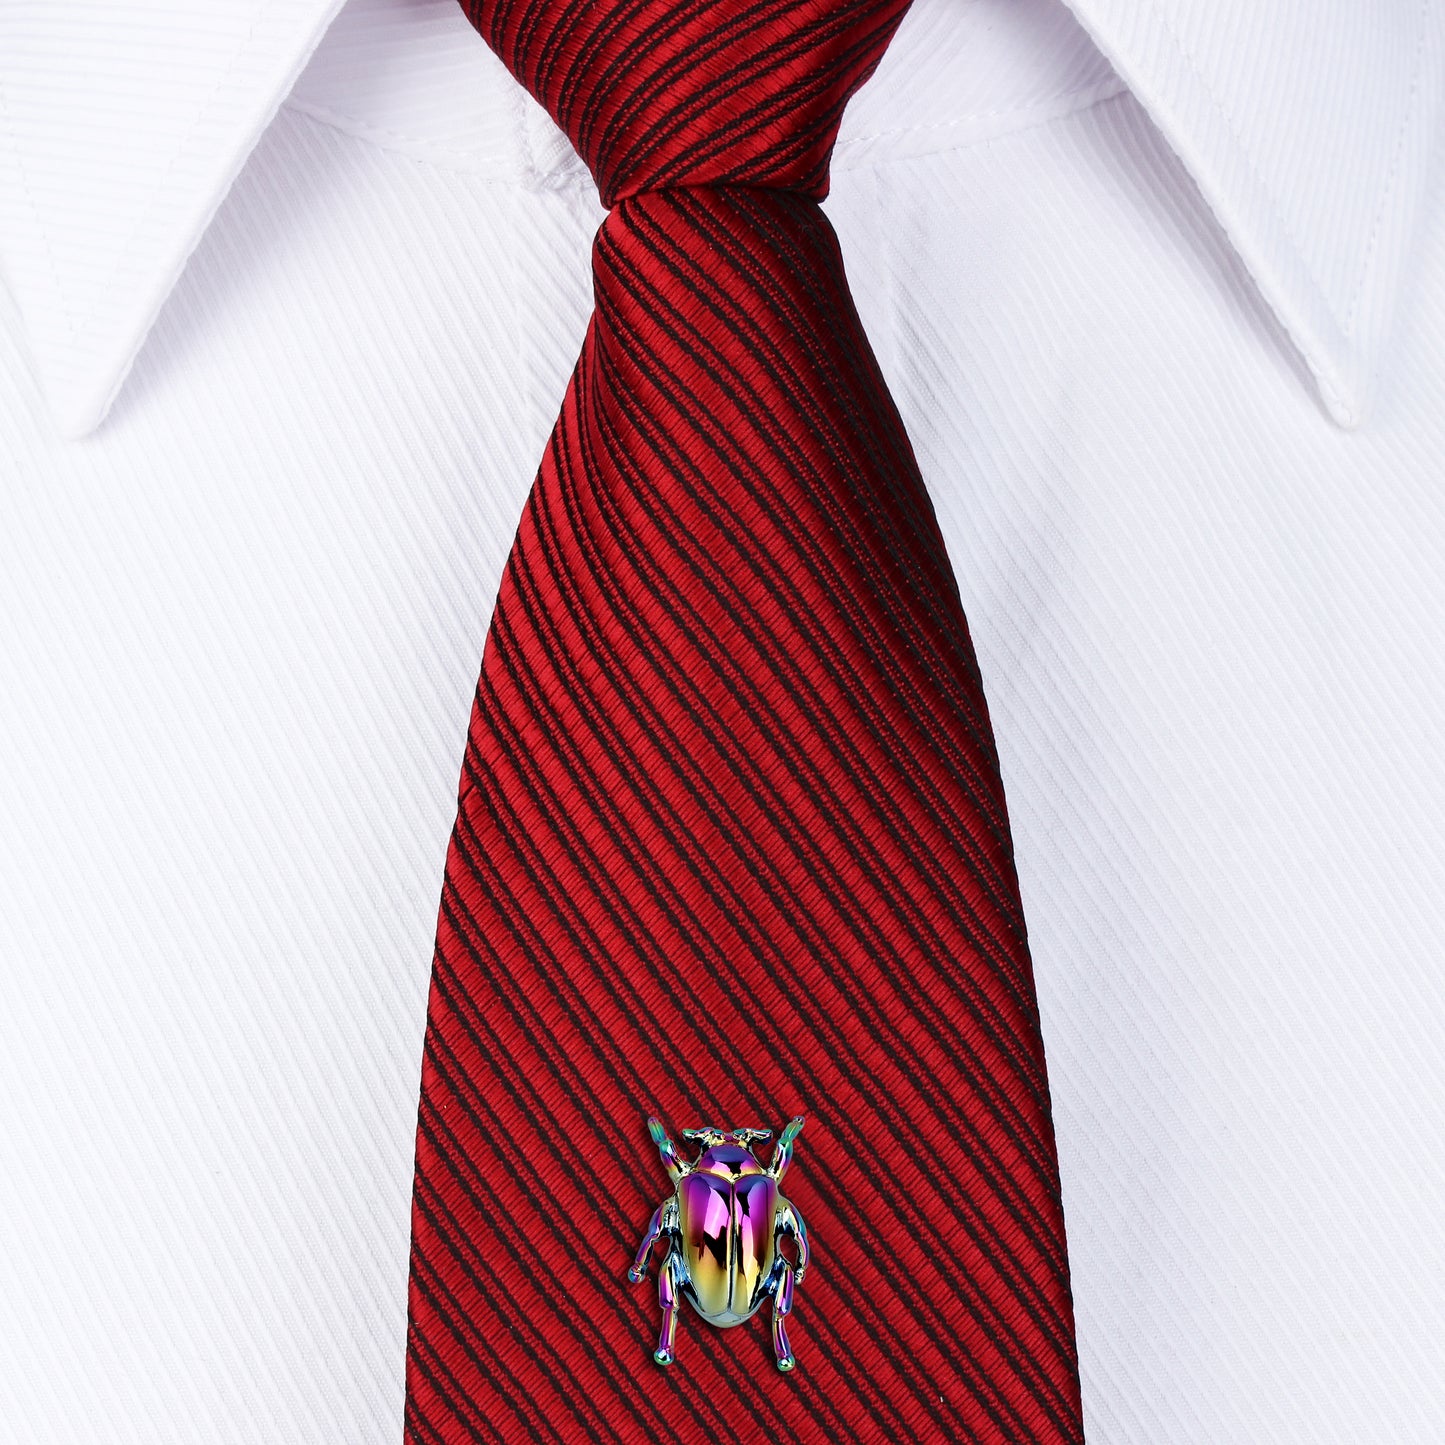 HAWSON Colorful Beetle Tie Tack